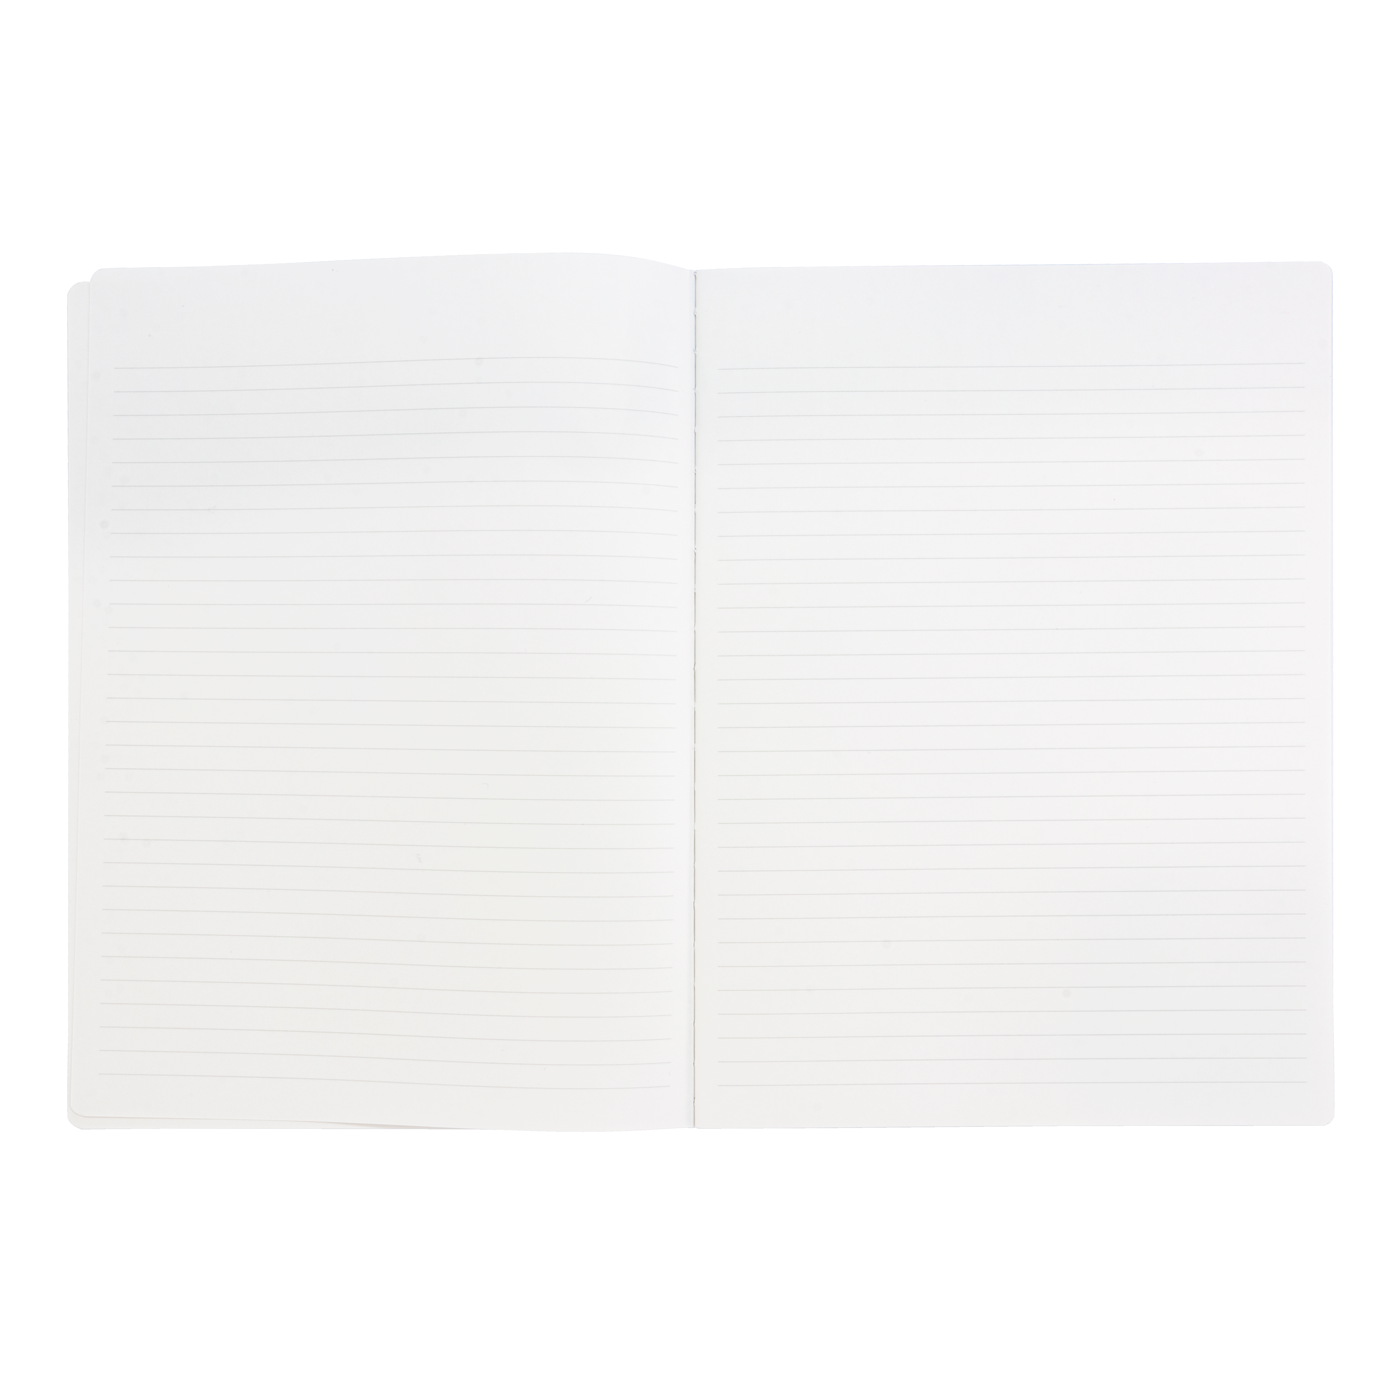 Stalogy Notebook- B5 - 7mm Rule - 52 sheets